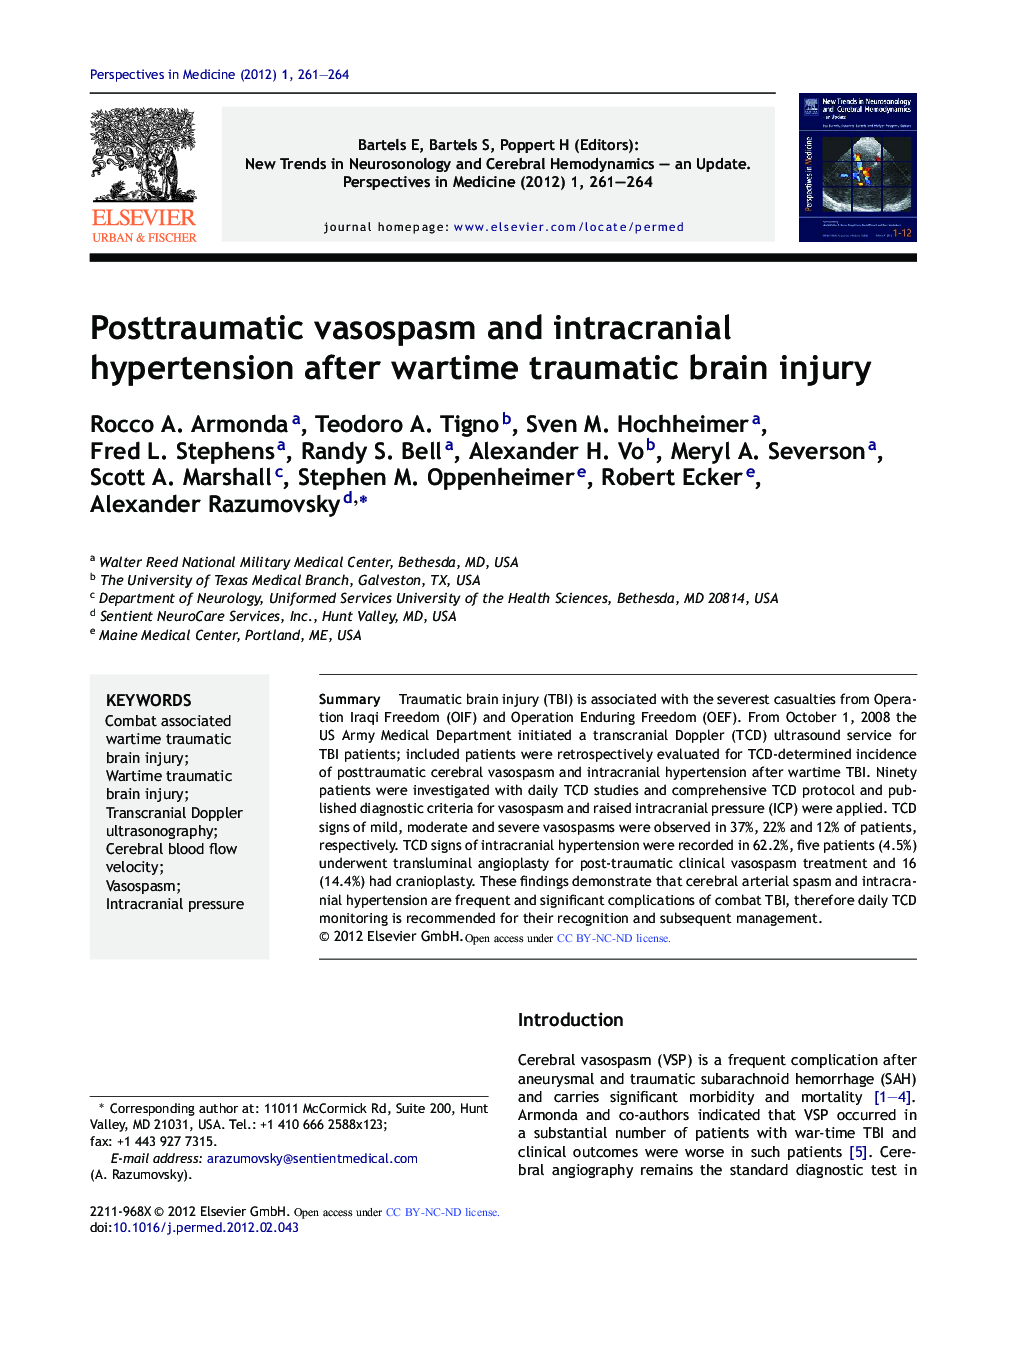 Posttraumatic vasospasm and intracranial hypertension after wartime traumatic brain injury